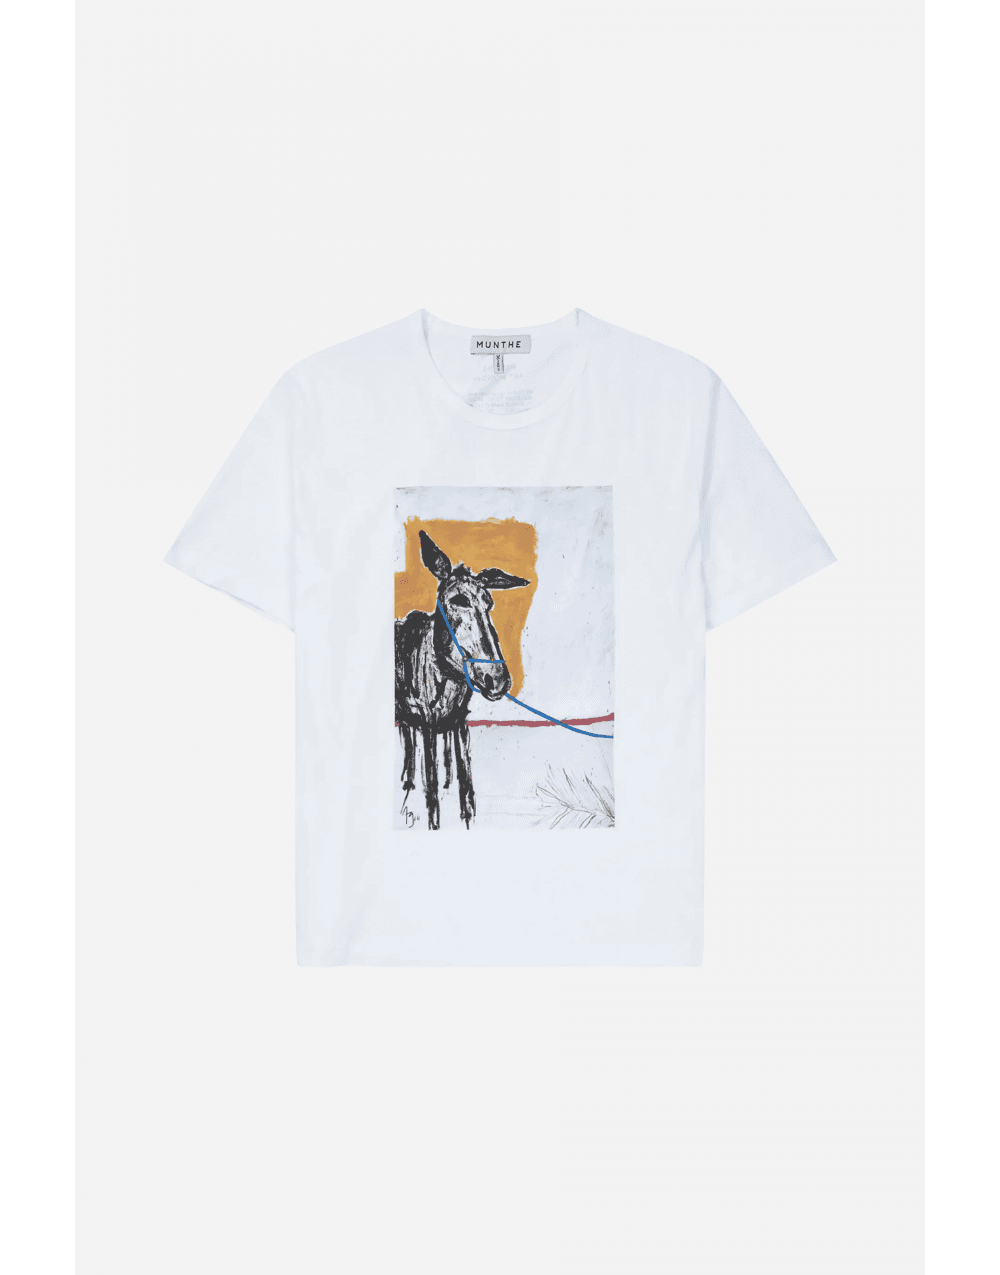 Munthe Munthe Midi Donkey Artistic T-shirt Col: White Multi, Size: 12